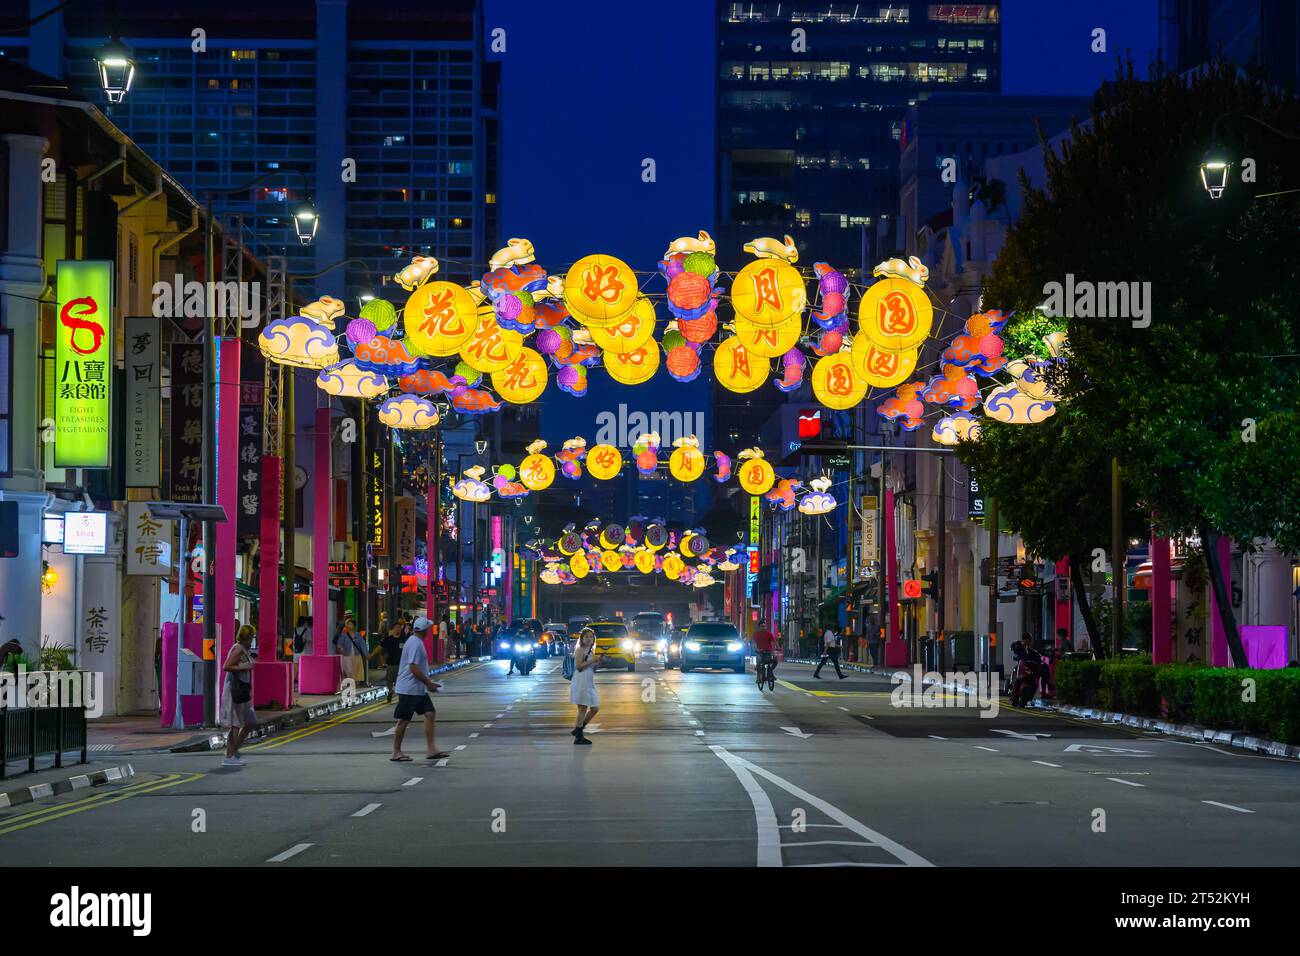 Illuminated street decorations on South Bridge Road, Chinatown, Singapore Stock Photo